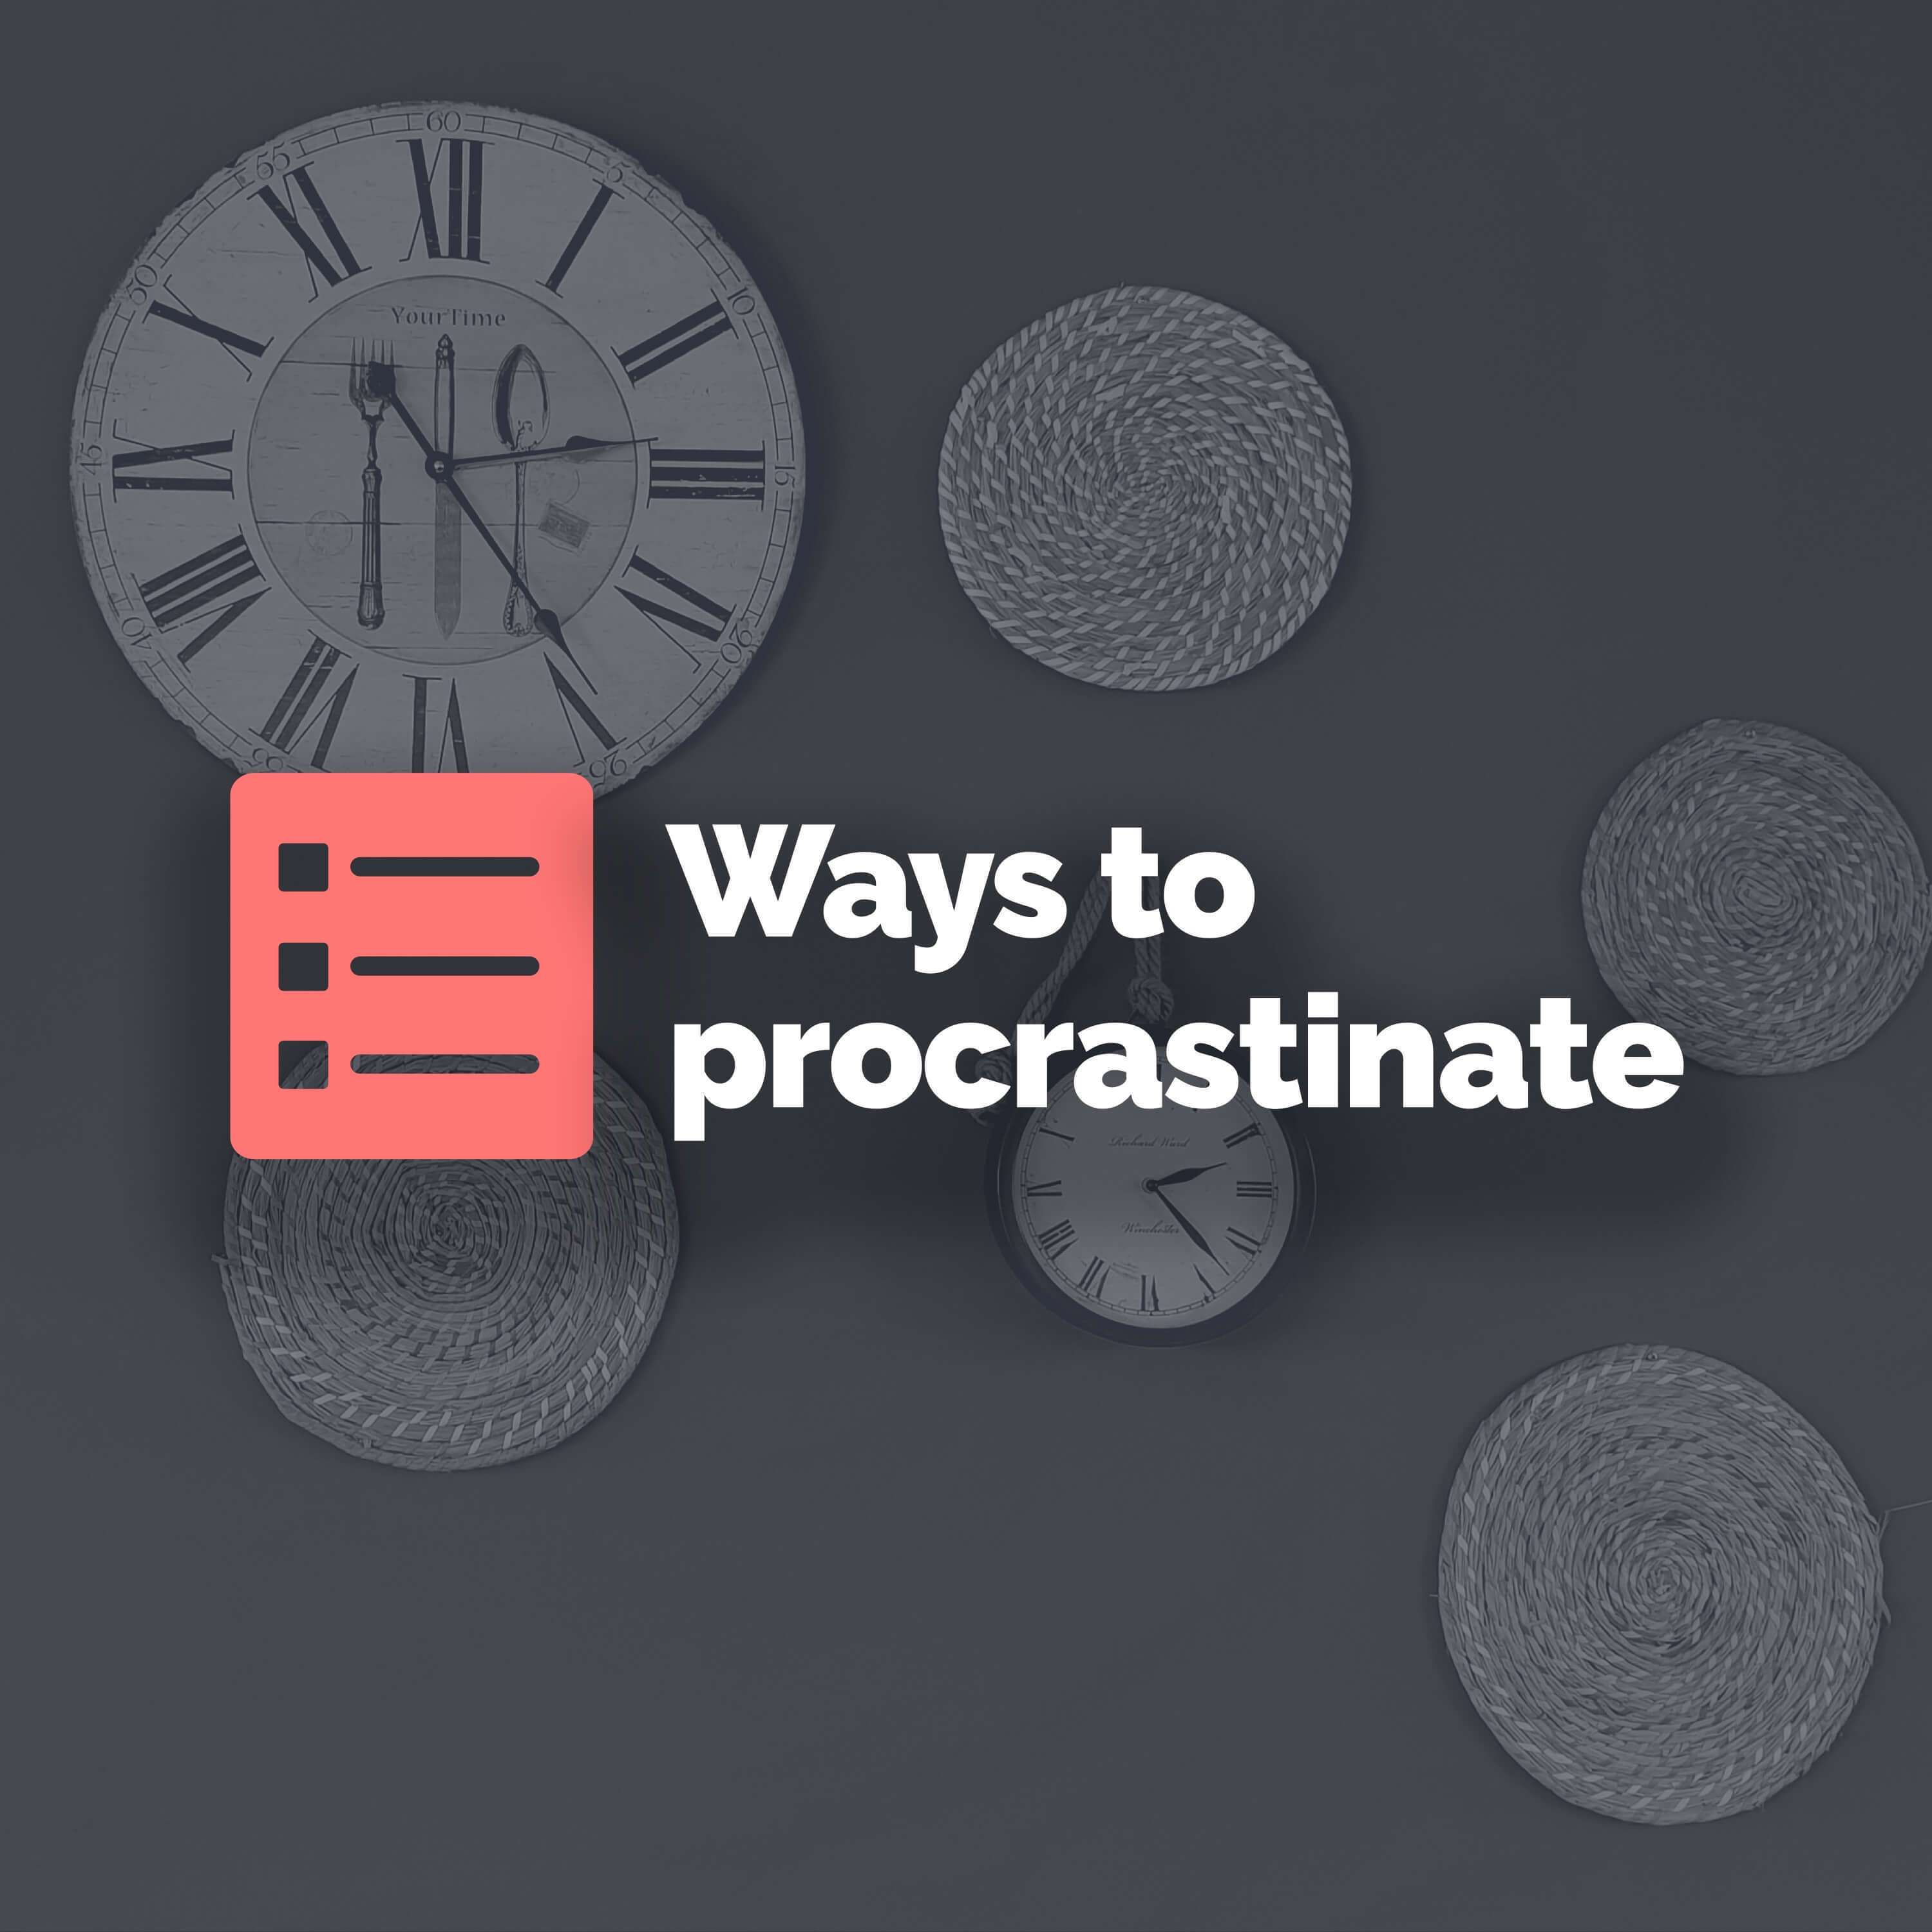 Top 5 ways to procrastinate